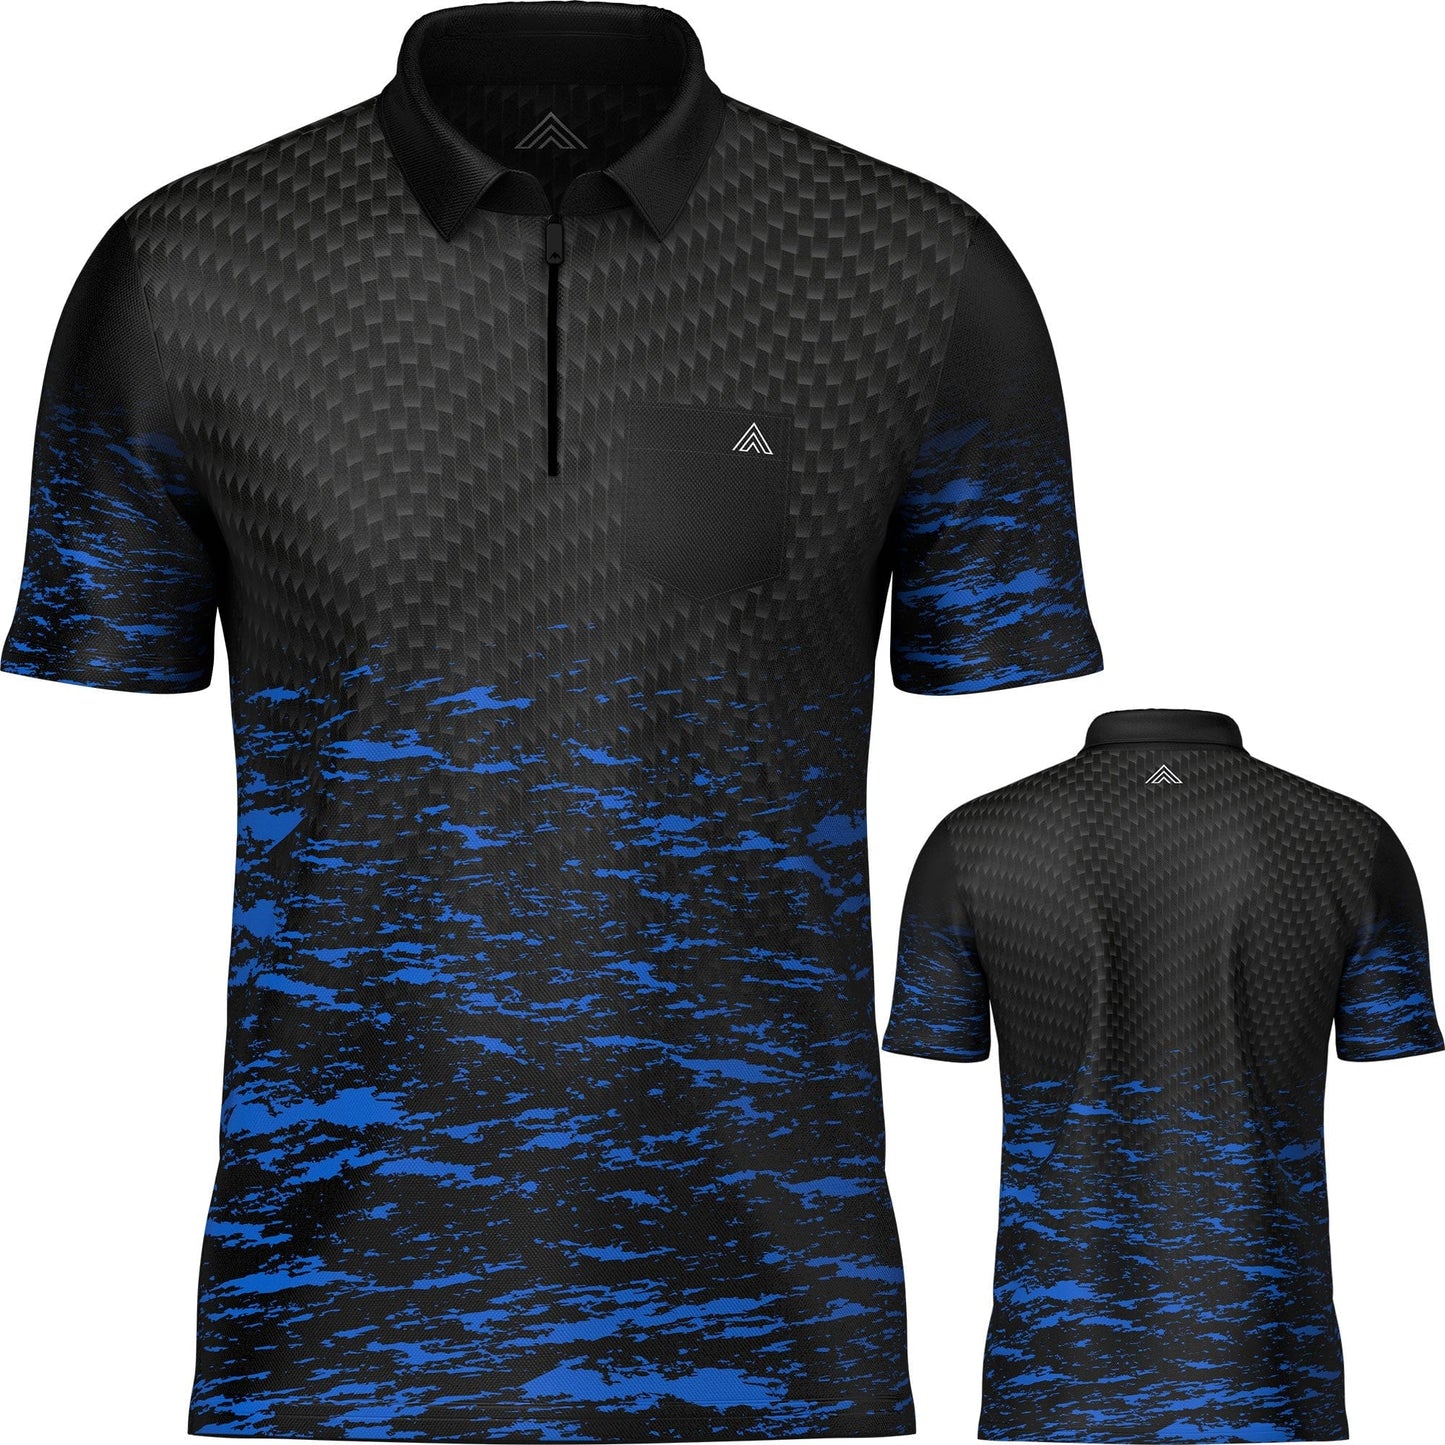 Arraz Lava Dart Shirt - with Pocket - Black & Blue Small